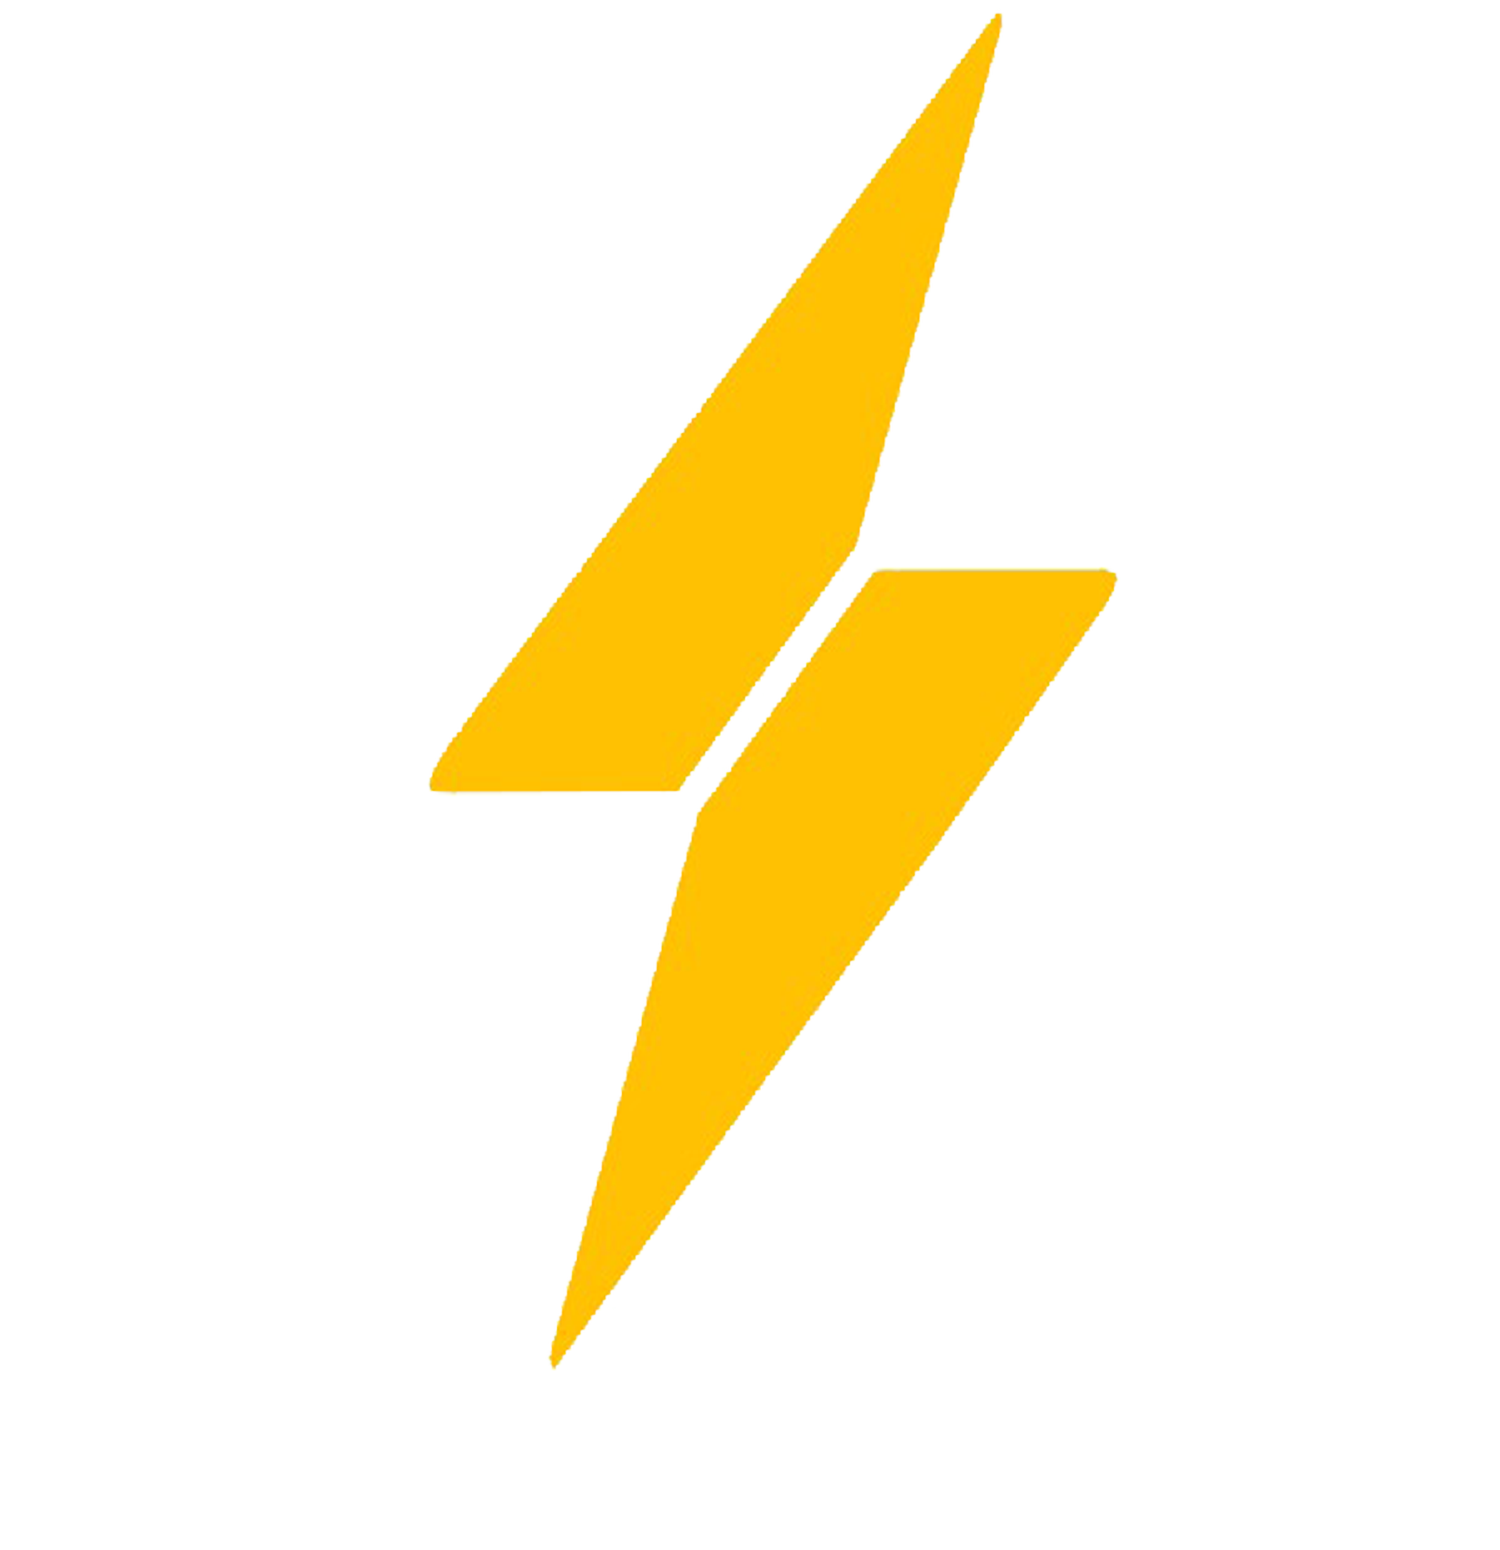 Electrify Europe